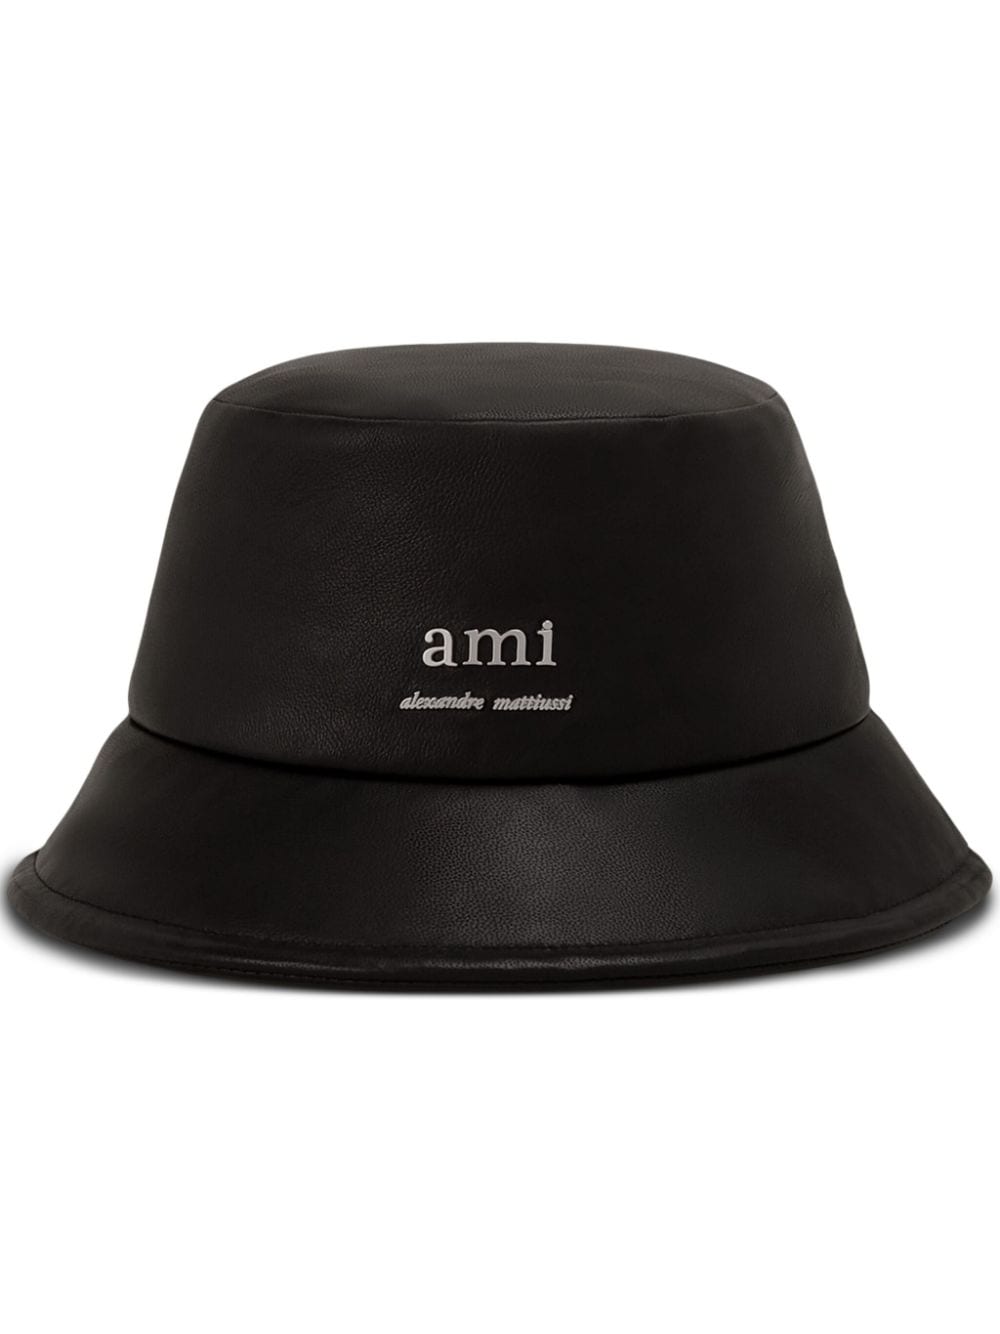 AMI Paris logo-plaque leather bucket hat - Black von AMI Paris